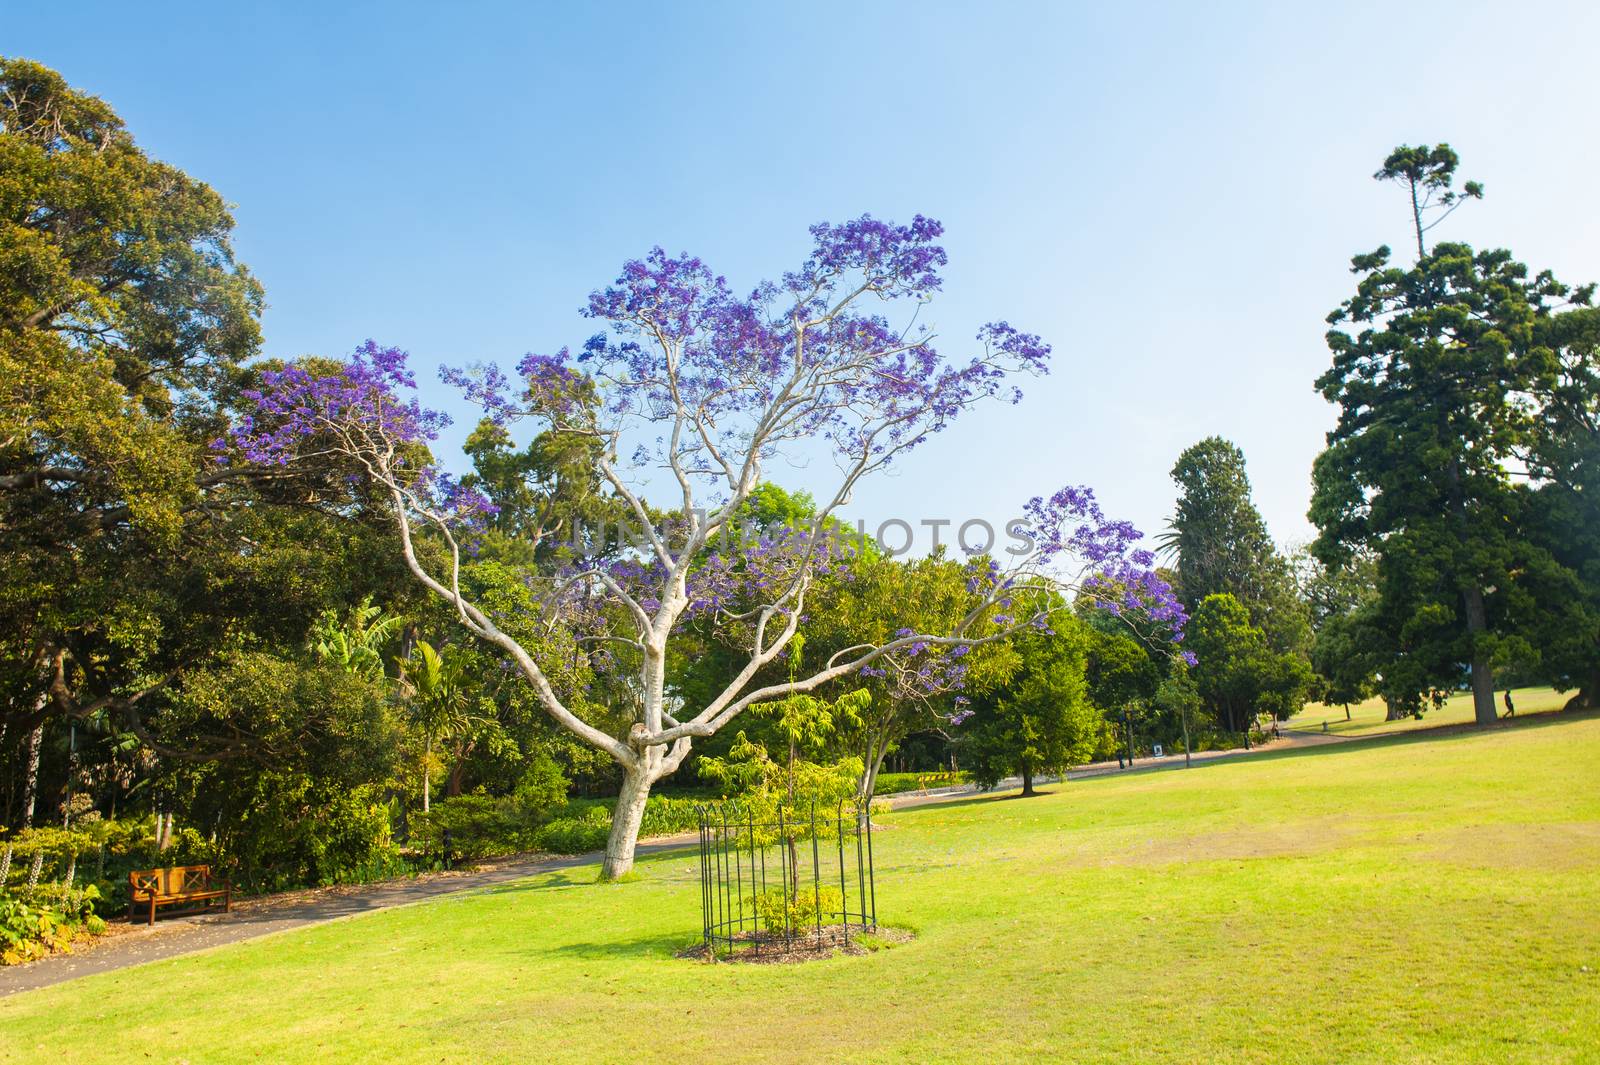 Jacaranda Tree blooming in Sydney by fyletto